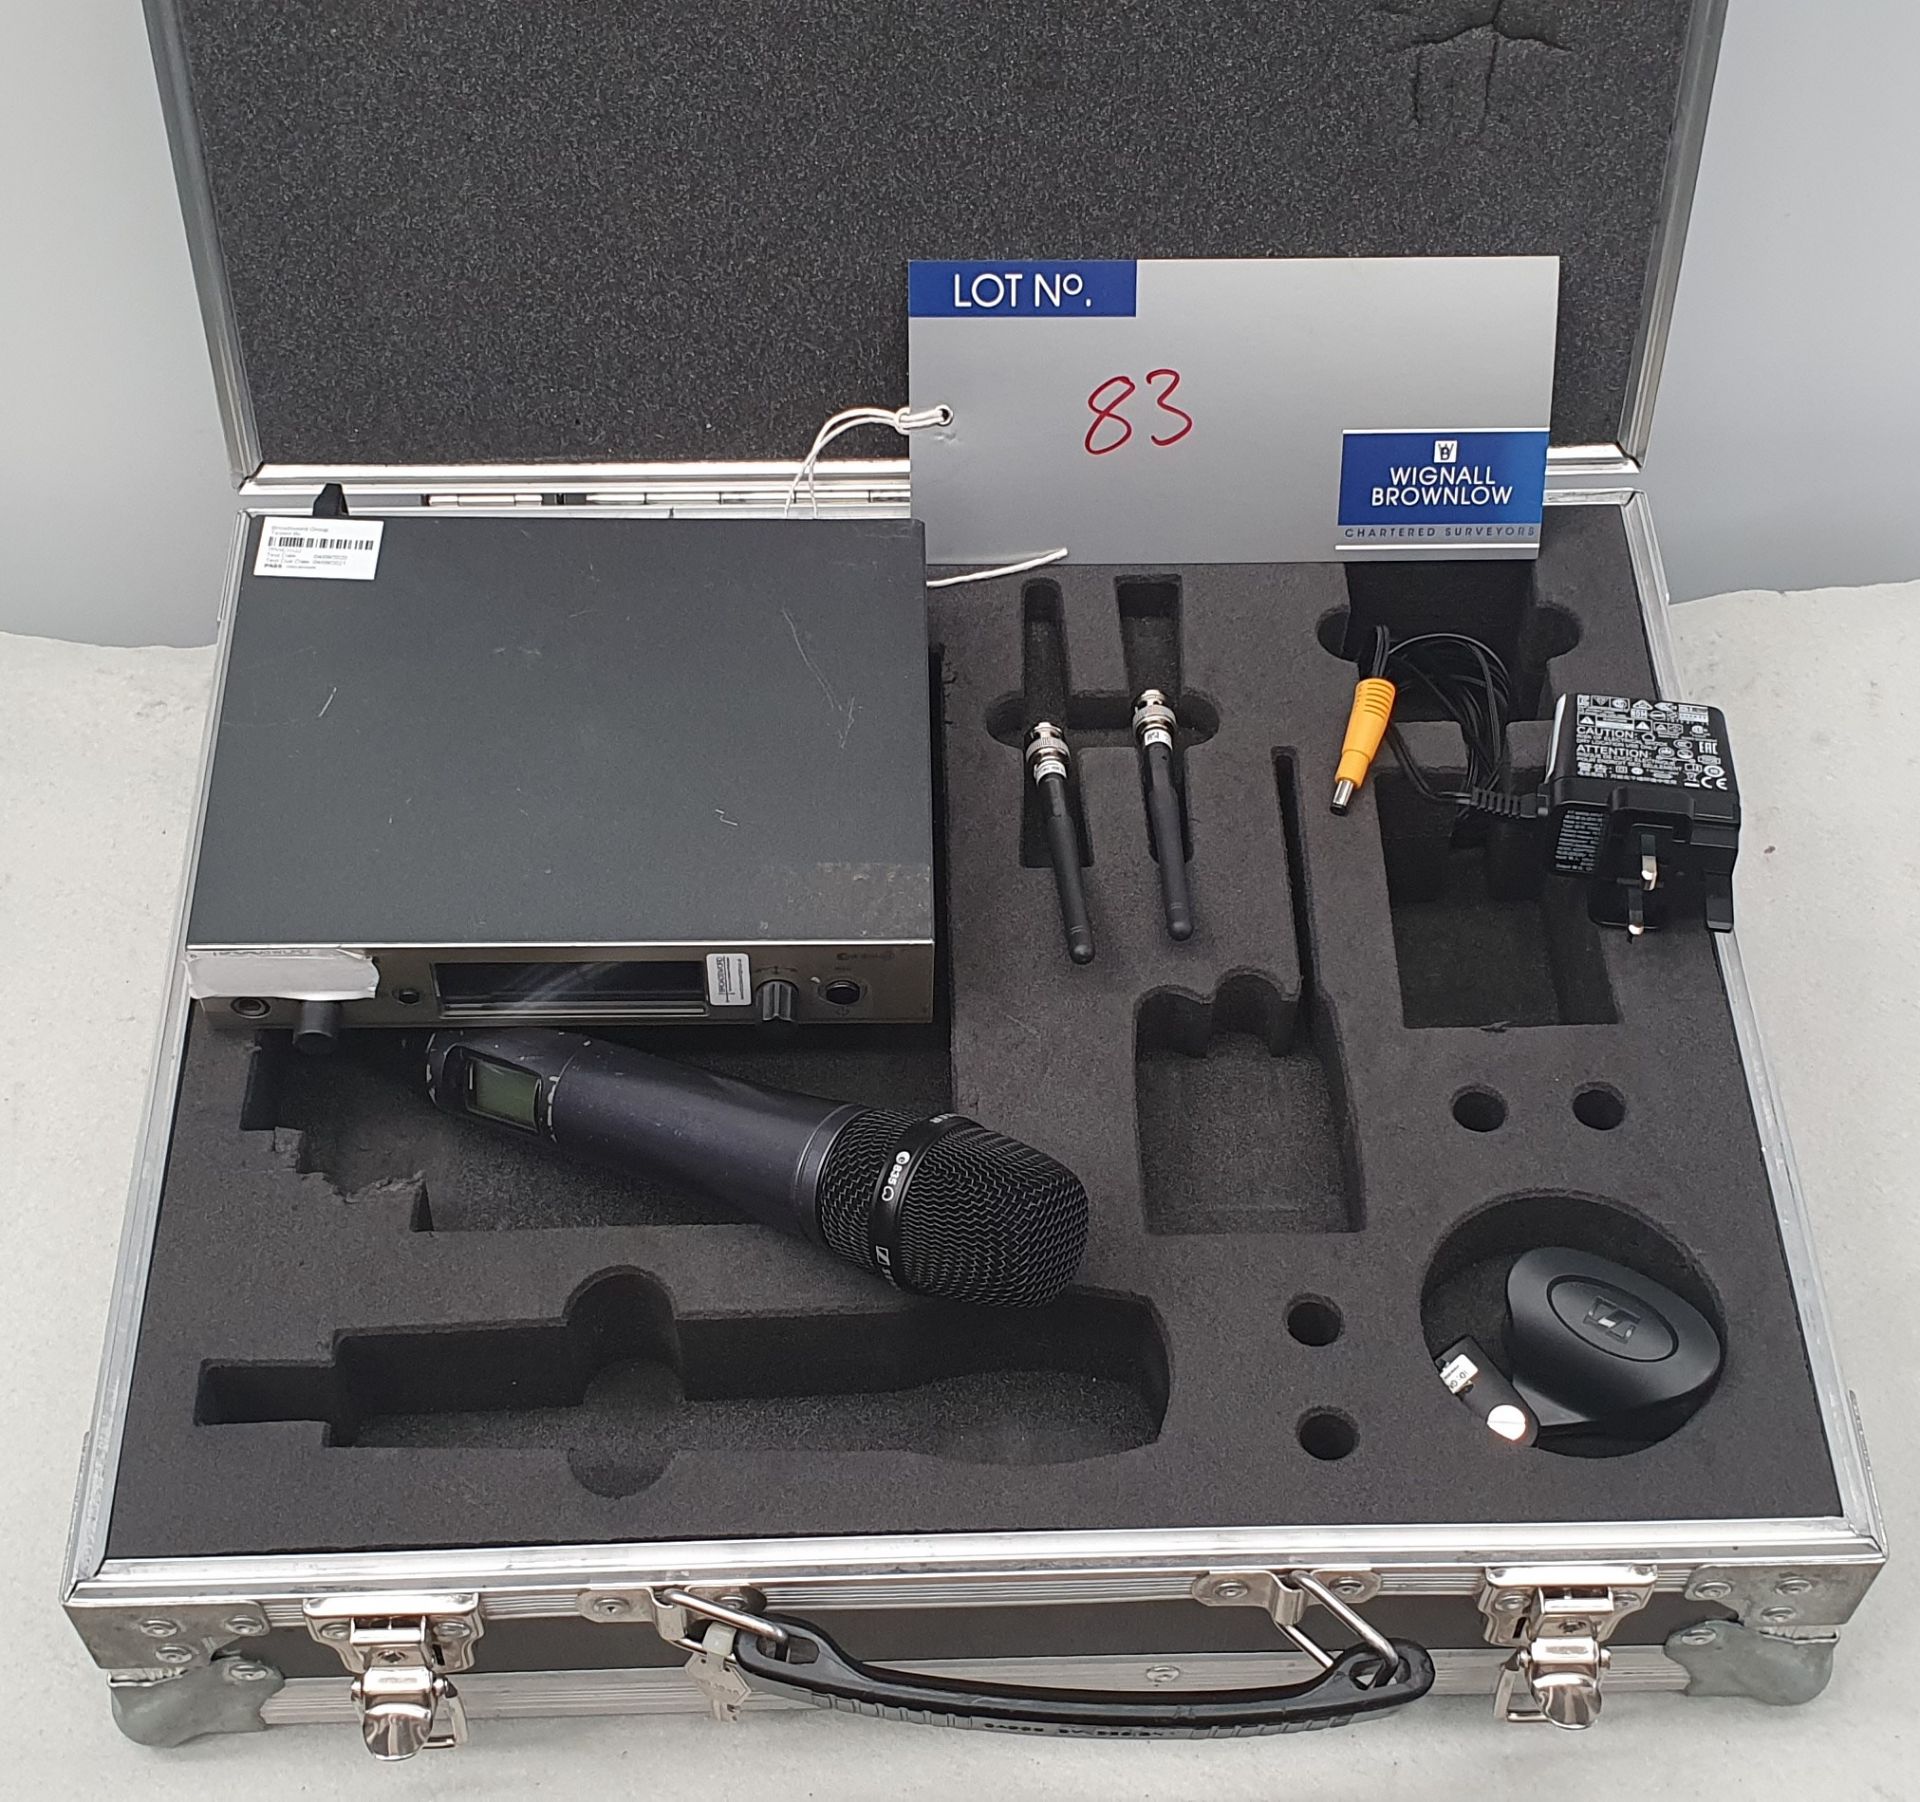 A Sennheiser Handheld Radio Microphone Kit comprising: 1 x EW300 G3 Receiver, 1 x Handheld